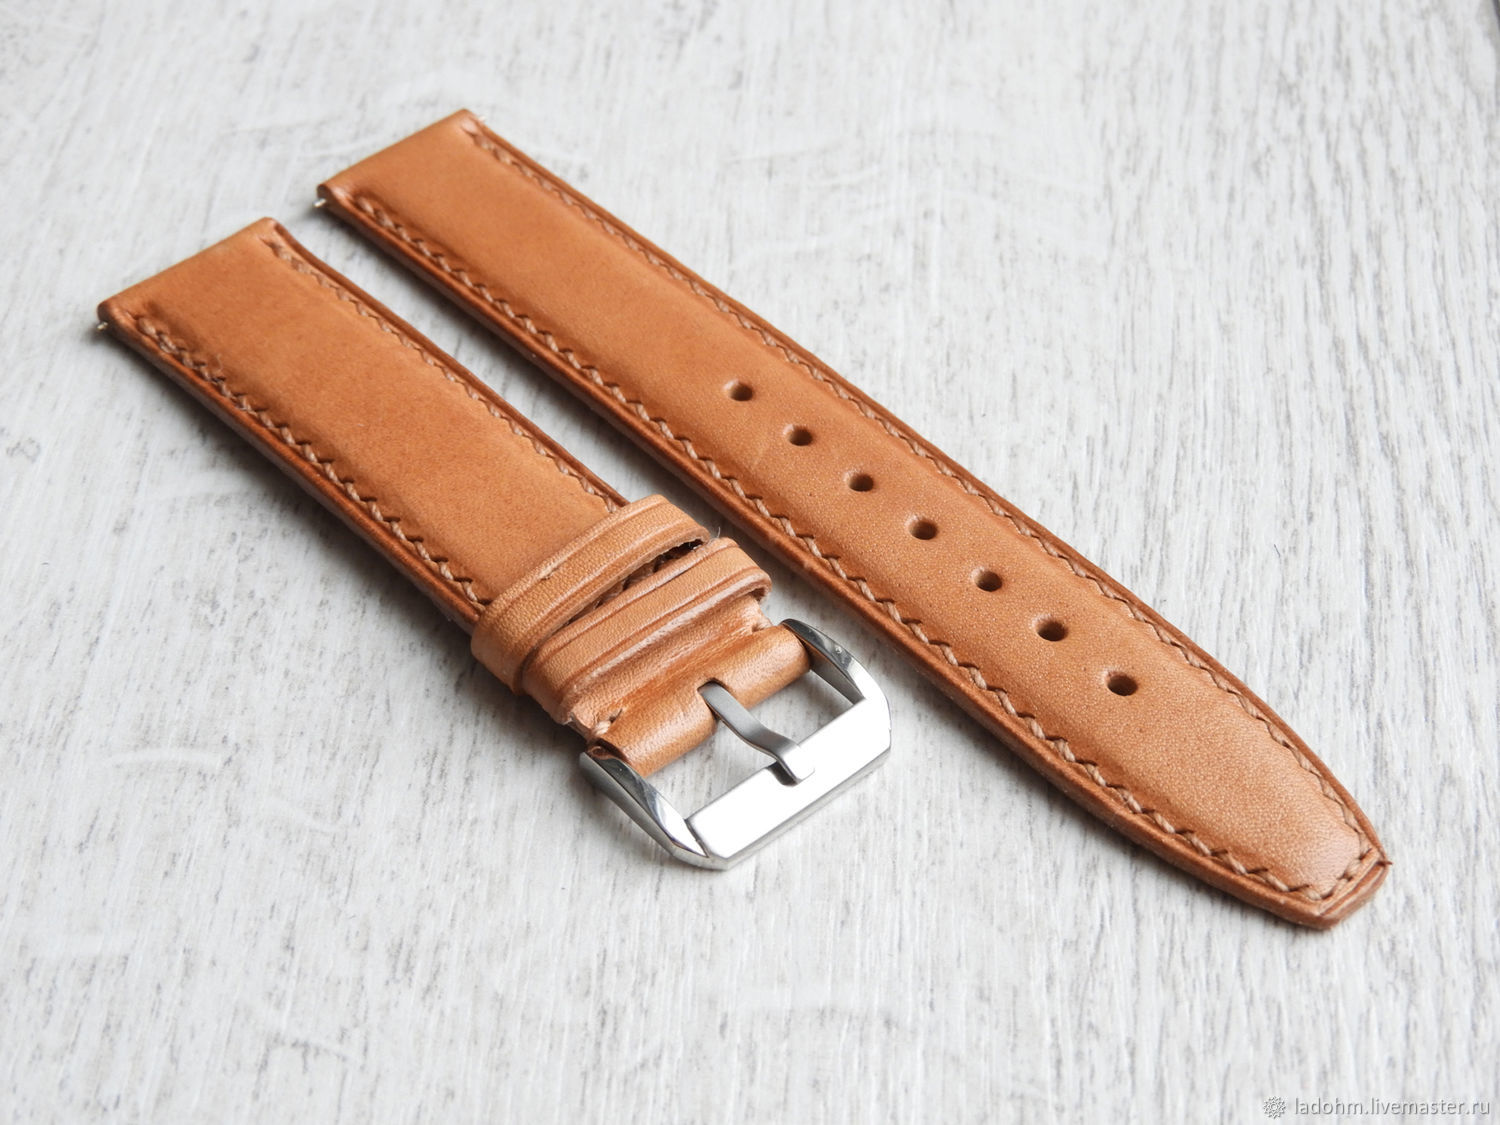 Stitched Leather Watch Strap 20mm â ÐºÑÐ¿Ð¸ÑÑ Ð½Ð° Ð¯ÑÐ¼Ð°ÑÐºÐµ ÐÐ°ÑÑÐµÑÐ¾Ð² â HPHQNCOM | Ð ÐµÐ¼ÐµÑÐ¾Ðº Ð´Ð»Ñ ÑÐ°ÑÐ¾Ð² 